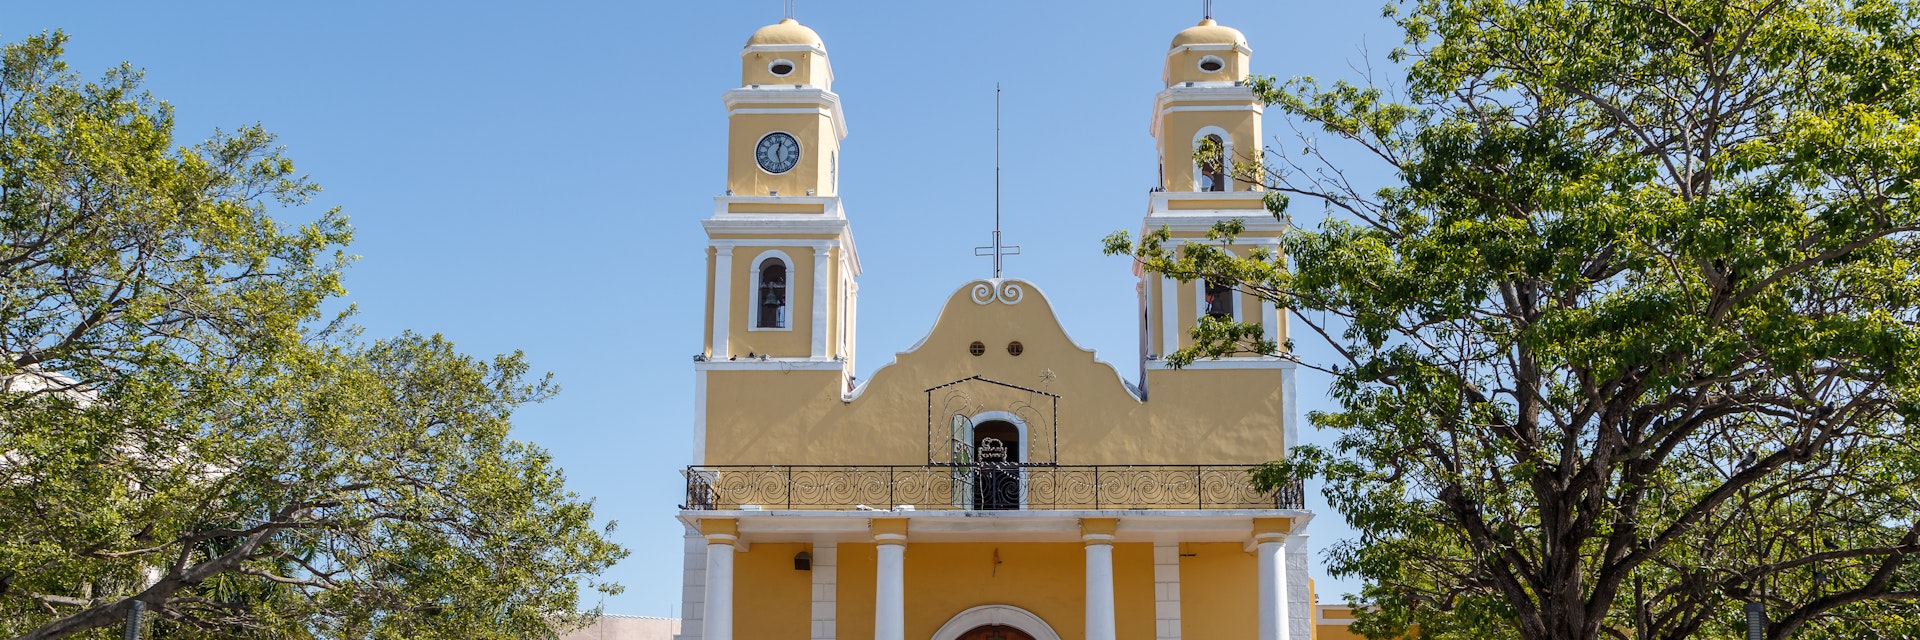 CIUDAD DEL CARMEN / MEXICO - DECEMBER 2015: Central square in colonial historic centre of Ciudad del Carmen town, Campeche, Mexico